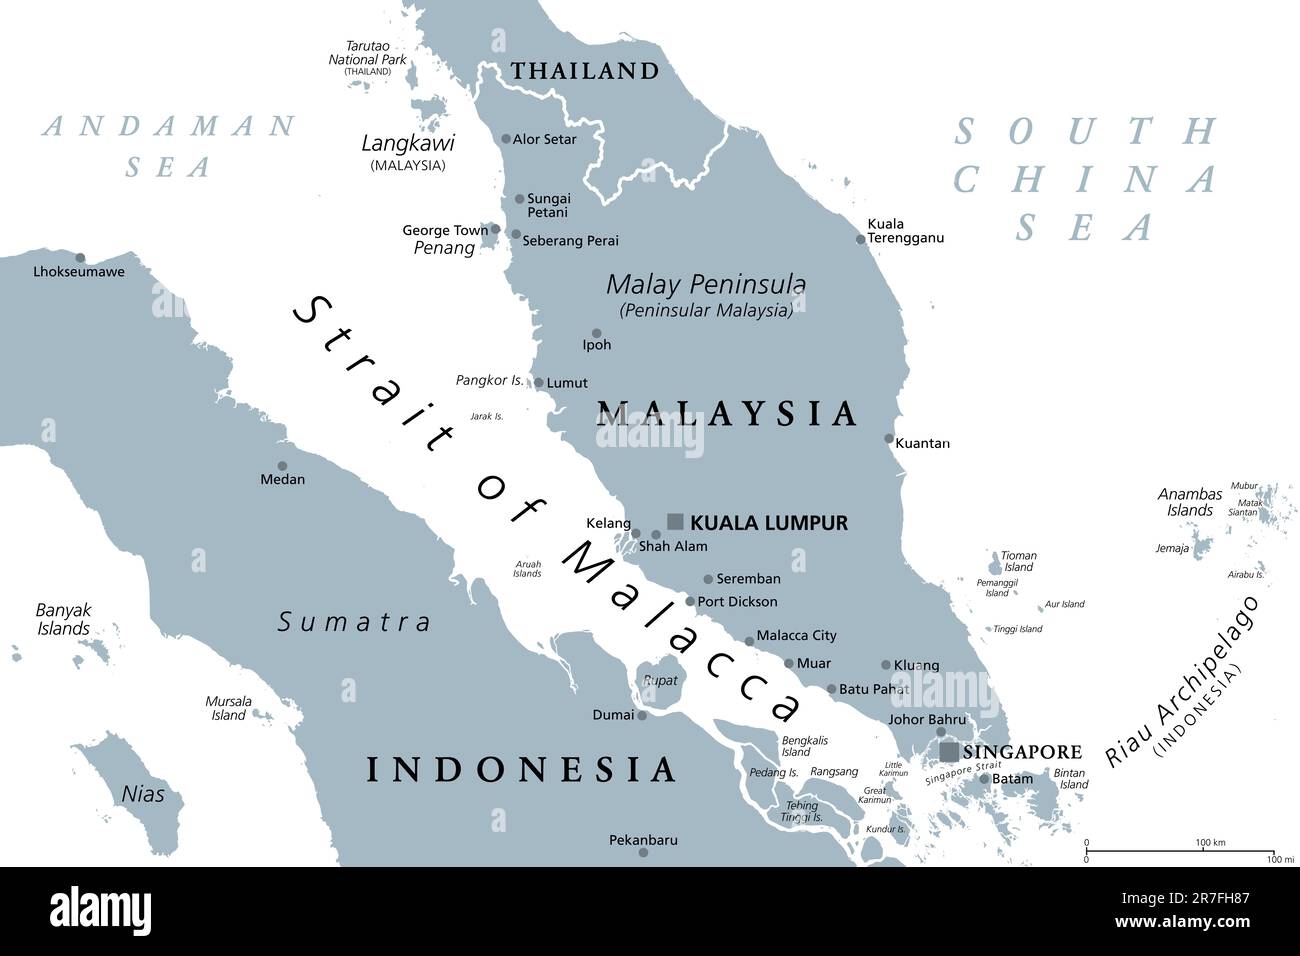 Strait of Malacca, gray political map. Important shipping lane and a main shipping channel between Malay Peninsula (Peninsular Malaysia) and Sumatra. Stock Photo